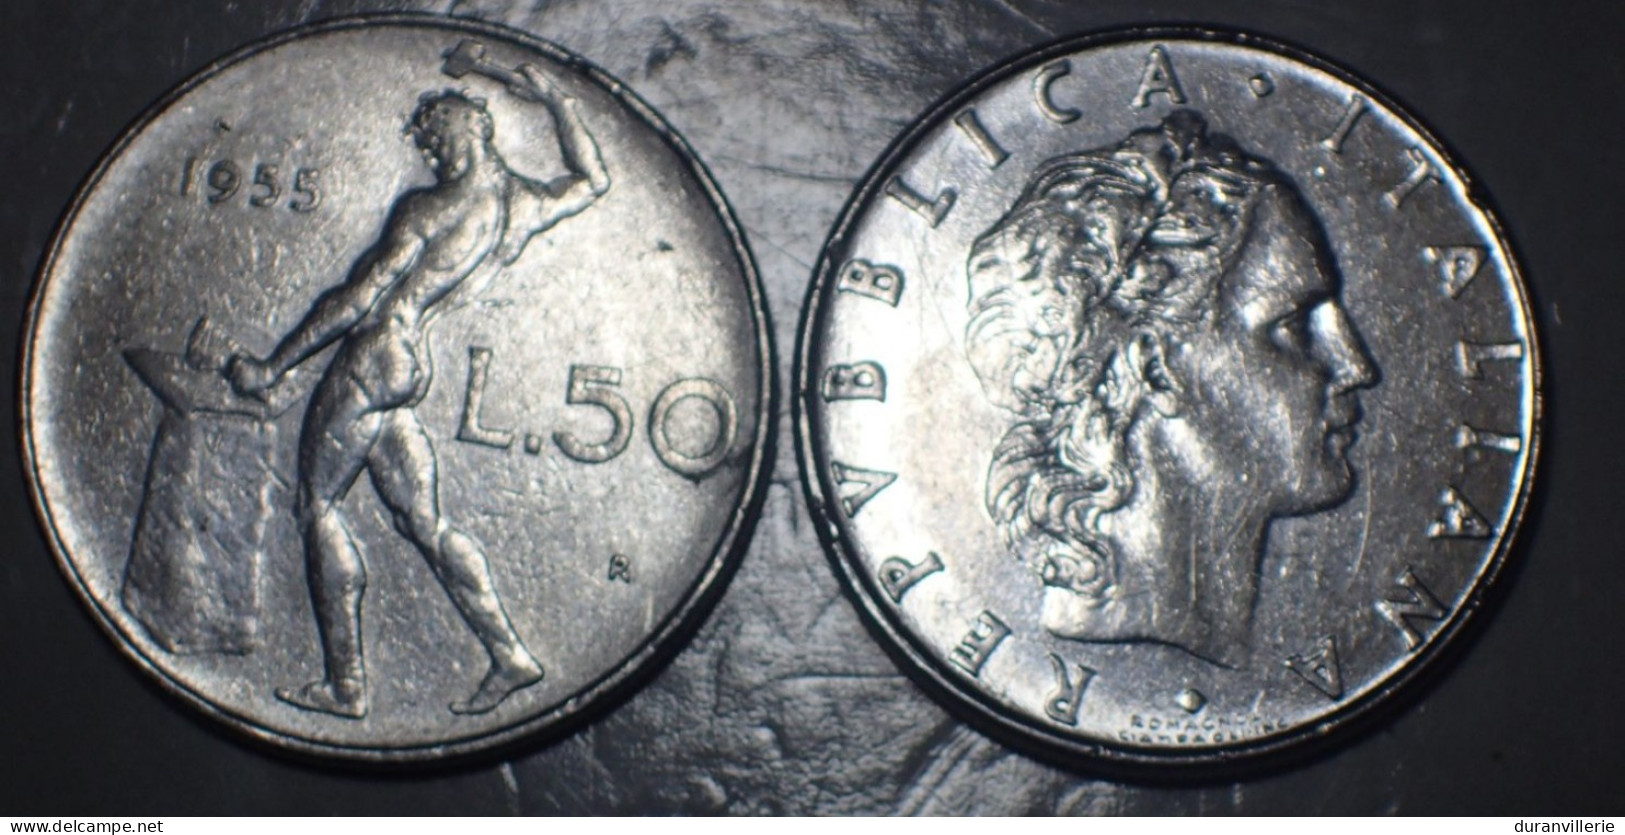 Italia - Italie - 50 Lire 1955 R - Republica Italiana - 50 Lire